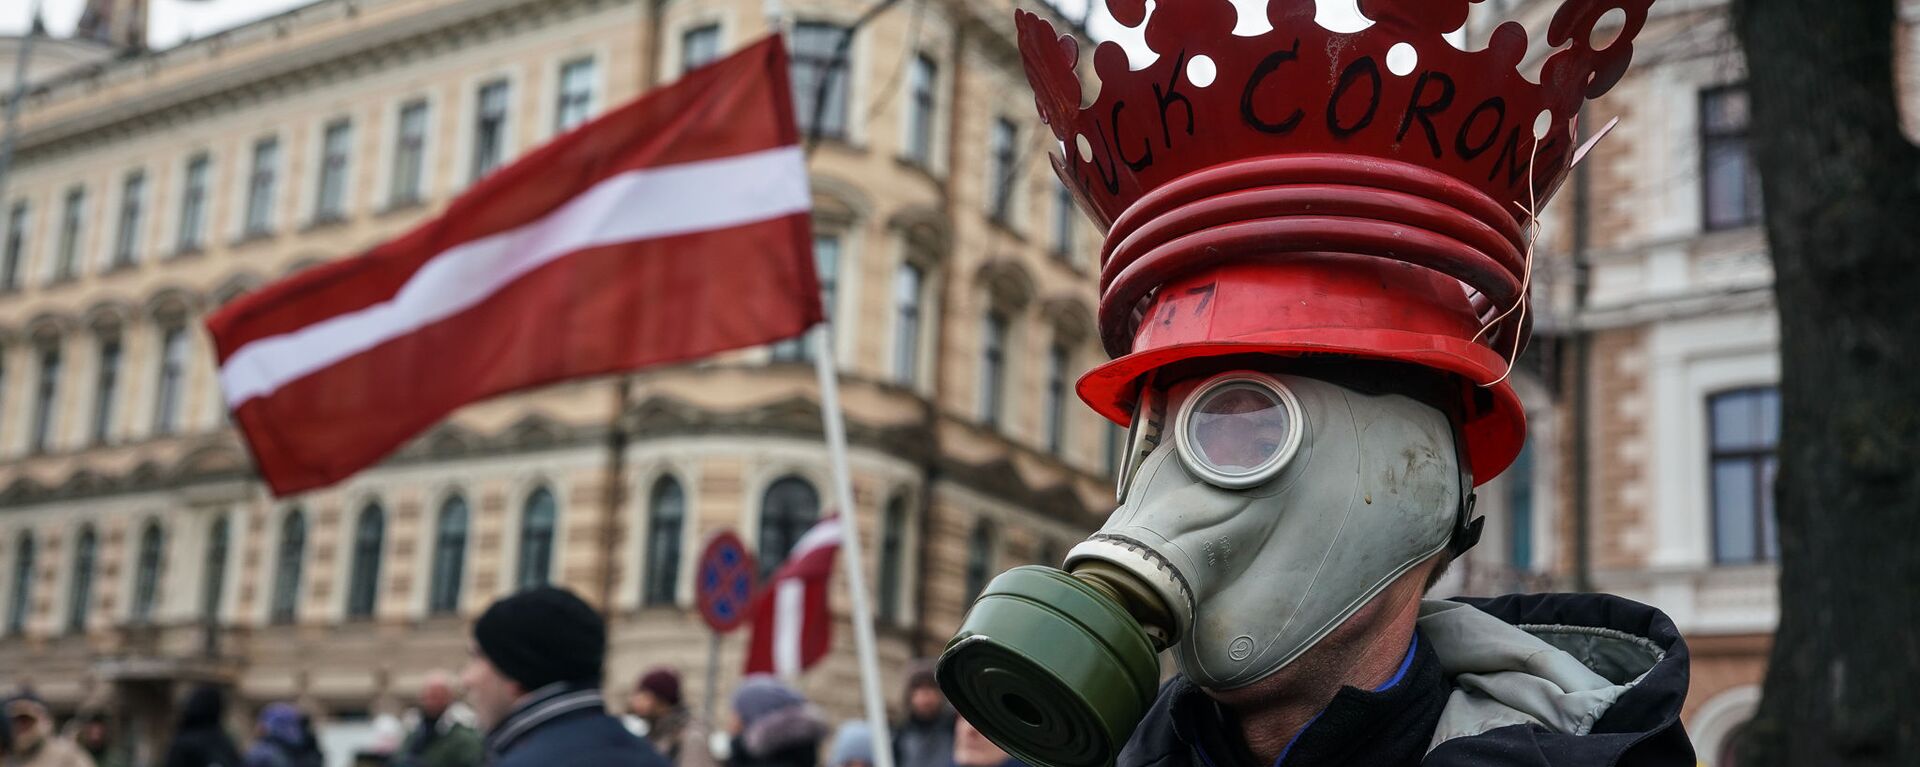 Акция протеста на набережной 11 Ноября в Риге.  - Sputnik Латвия, 1920, 11.01.2021